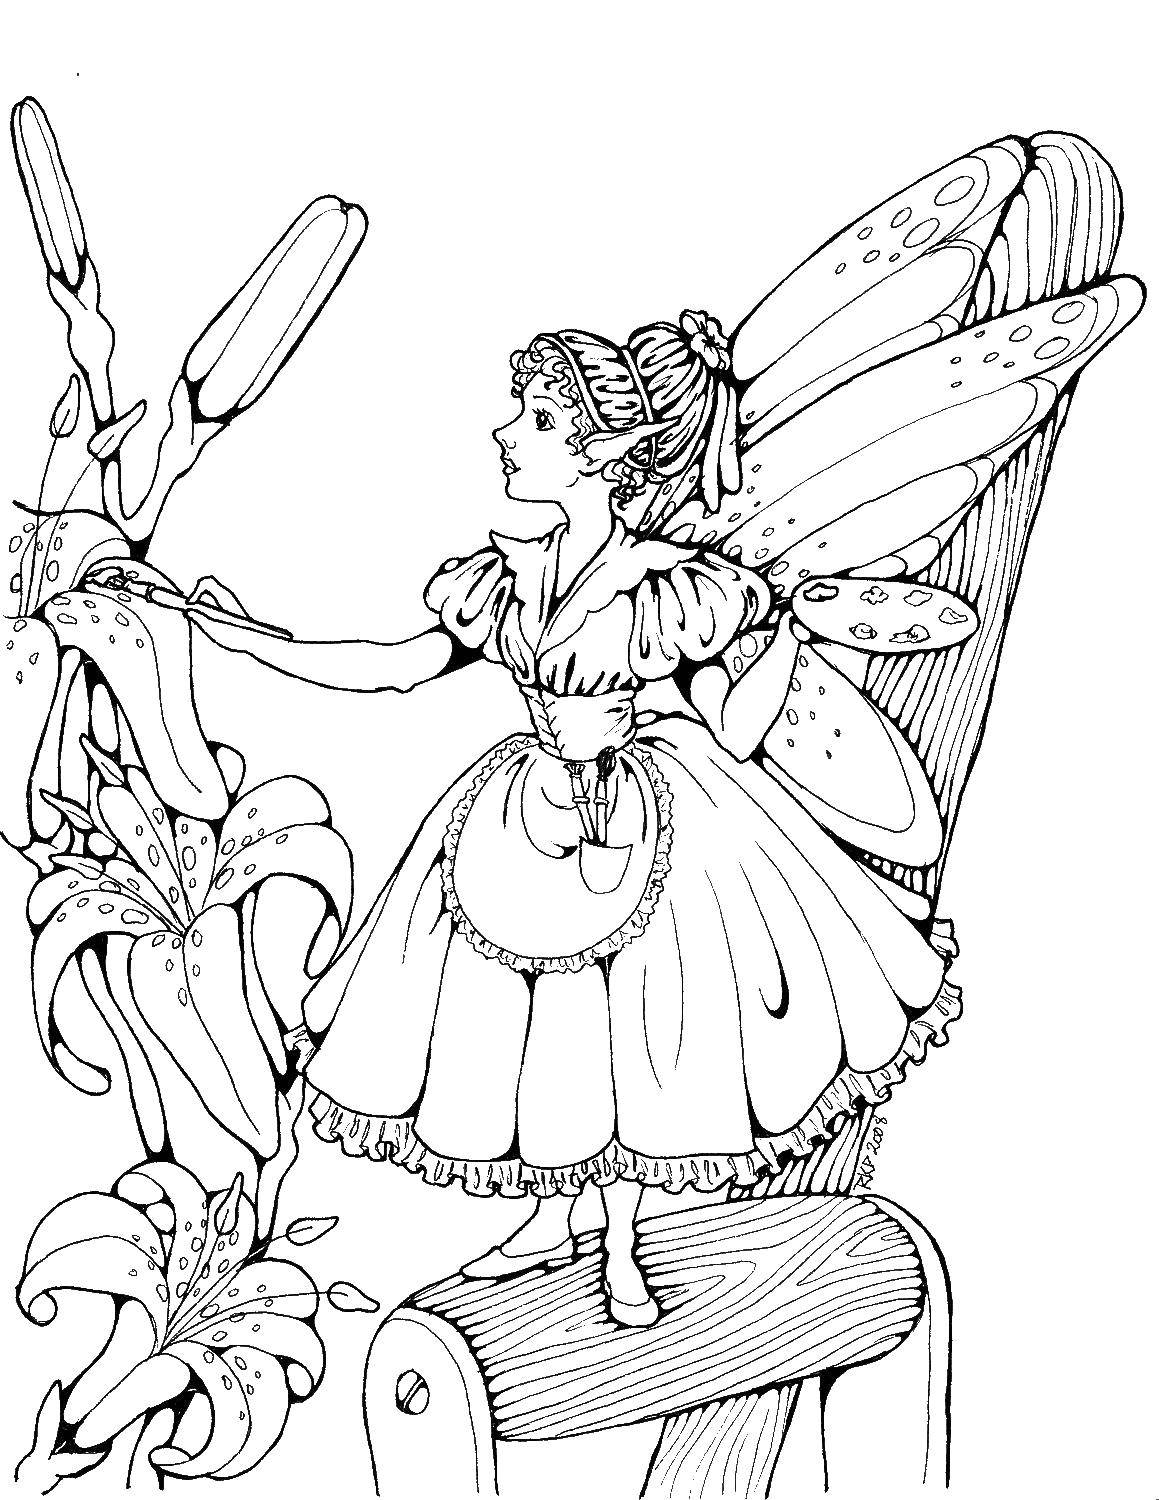 Coloring Fairy. Category fairy. Tags:  fairy.